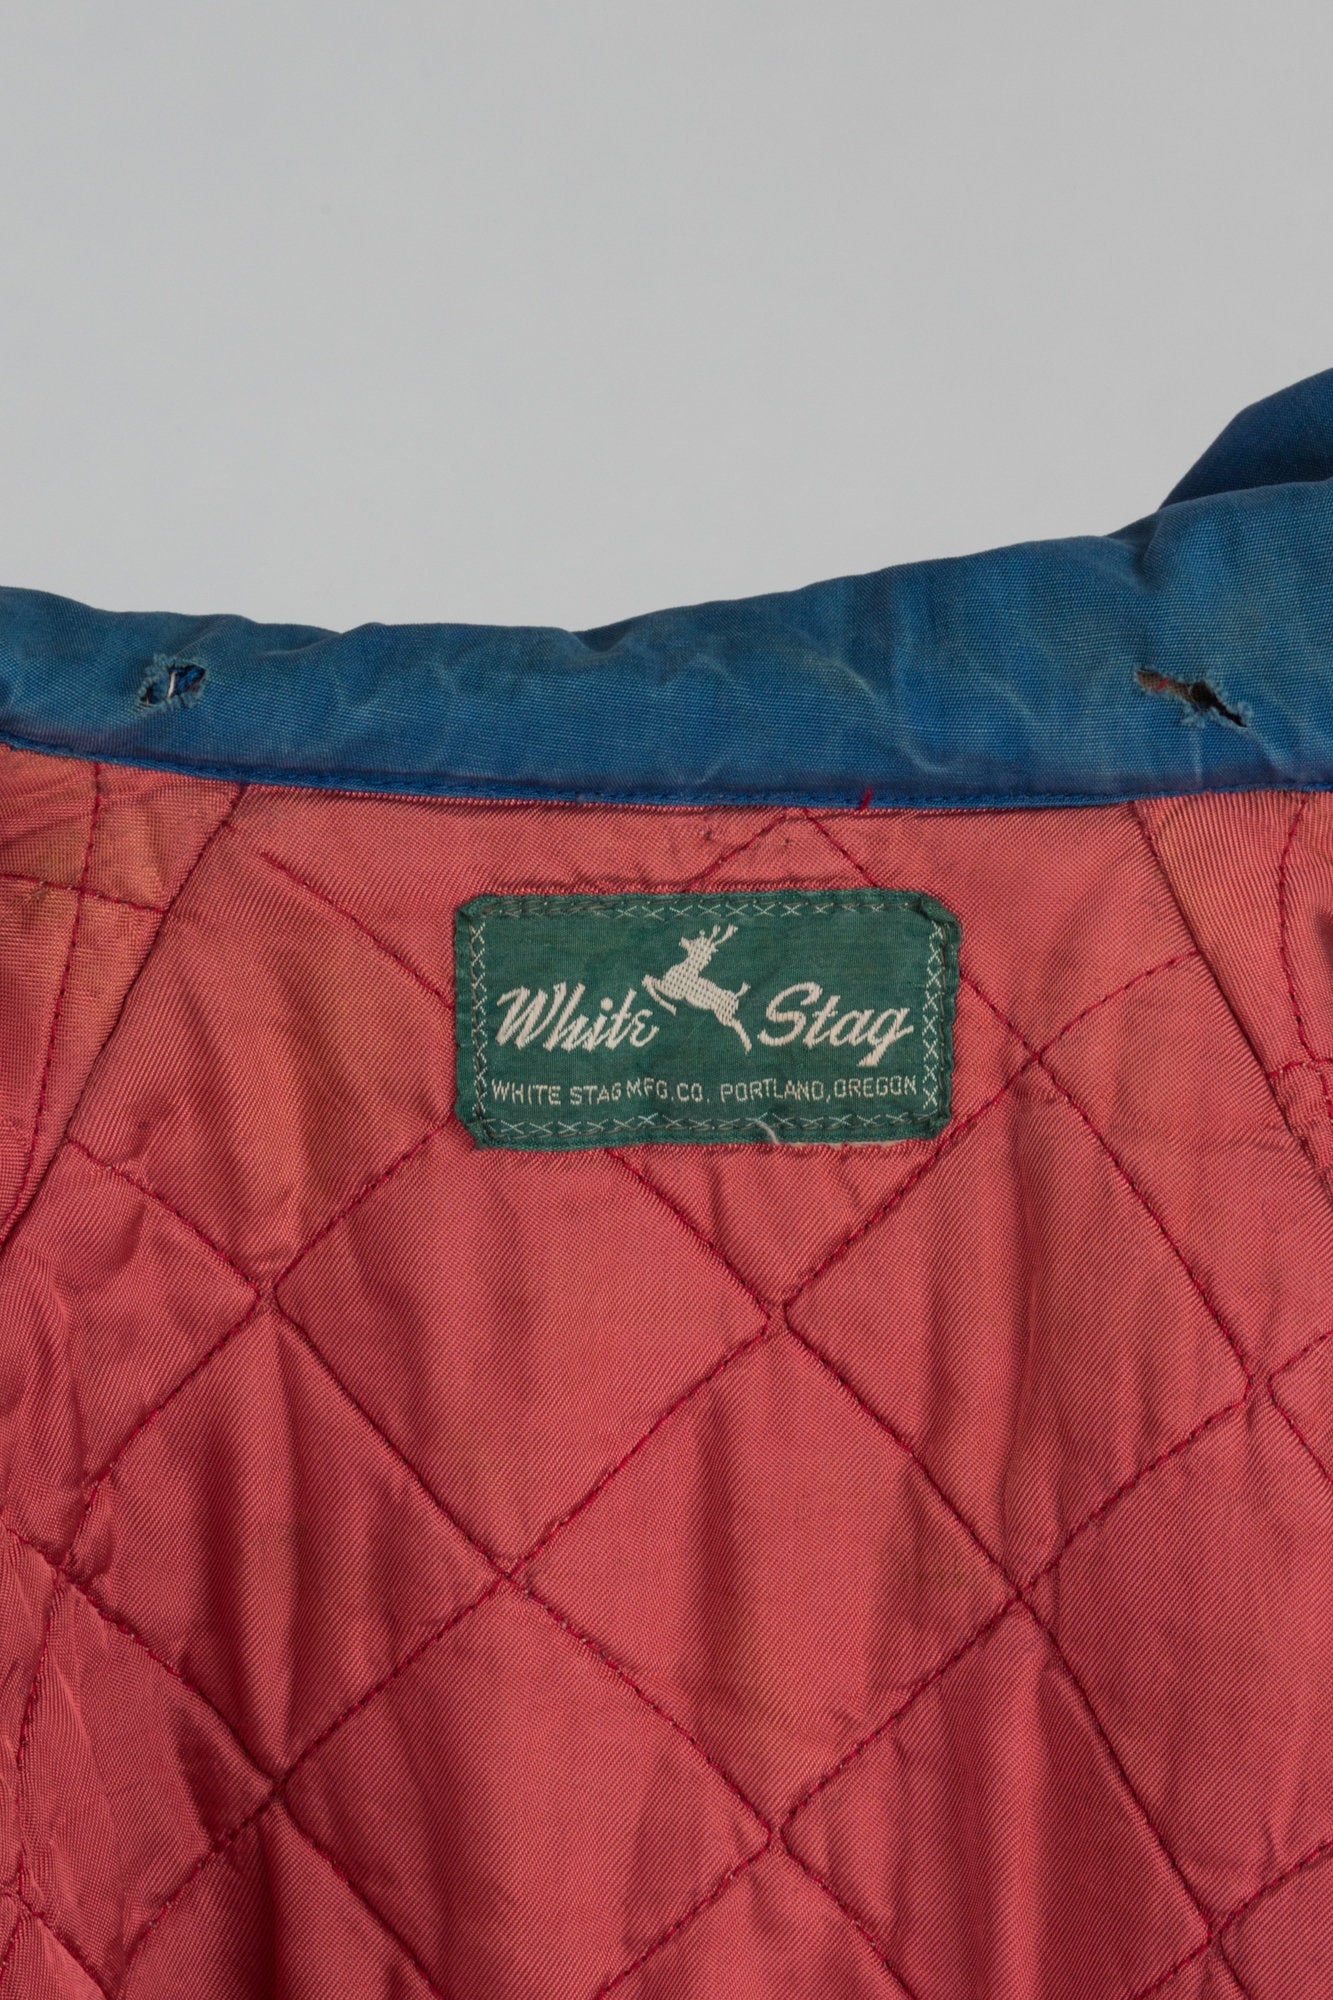 Rare 40s 50s White Stag Zip Up Ski Jacket - Petite Small to Medium